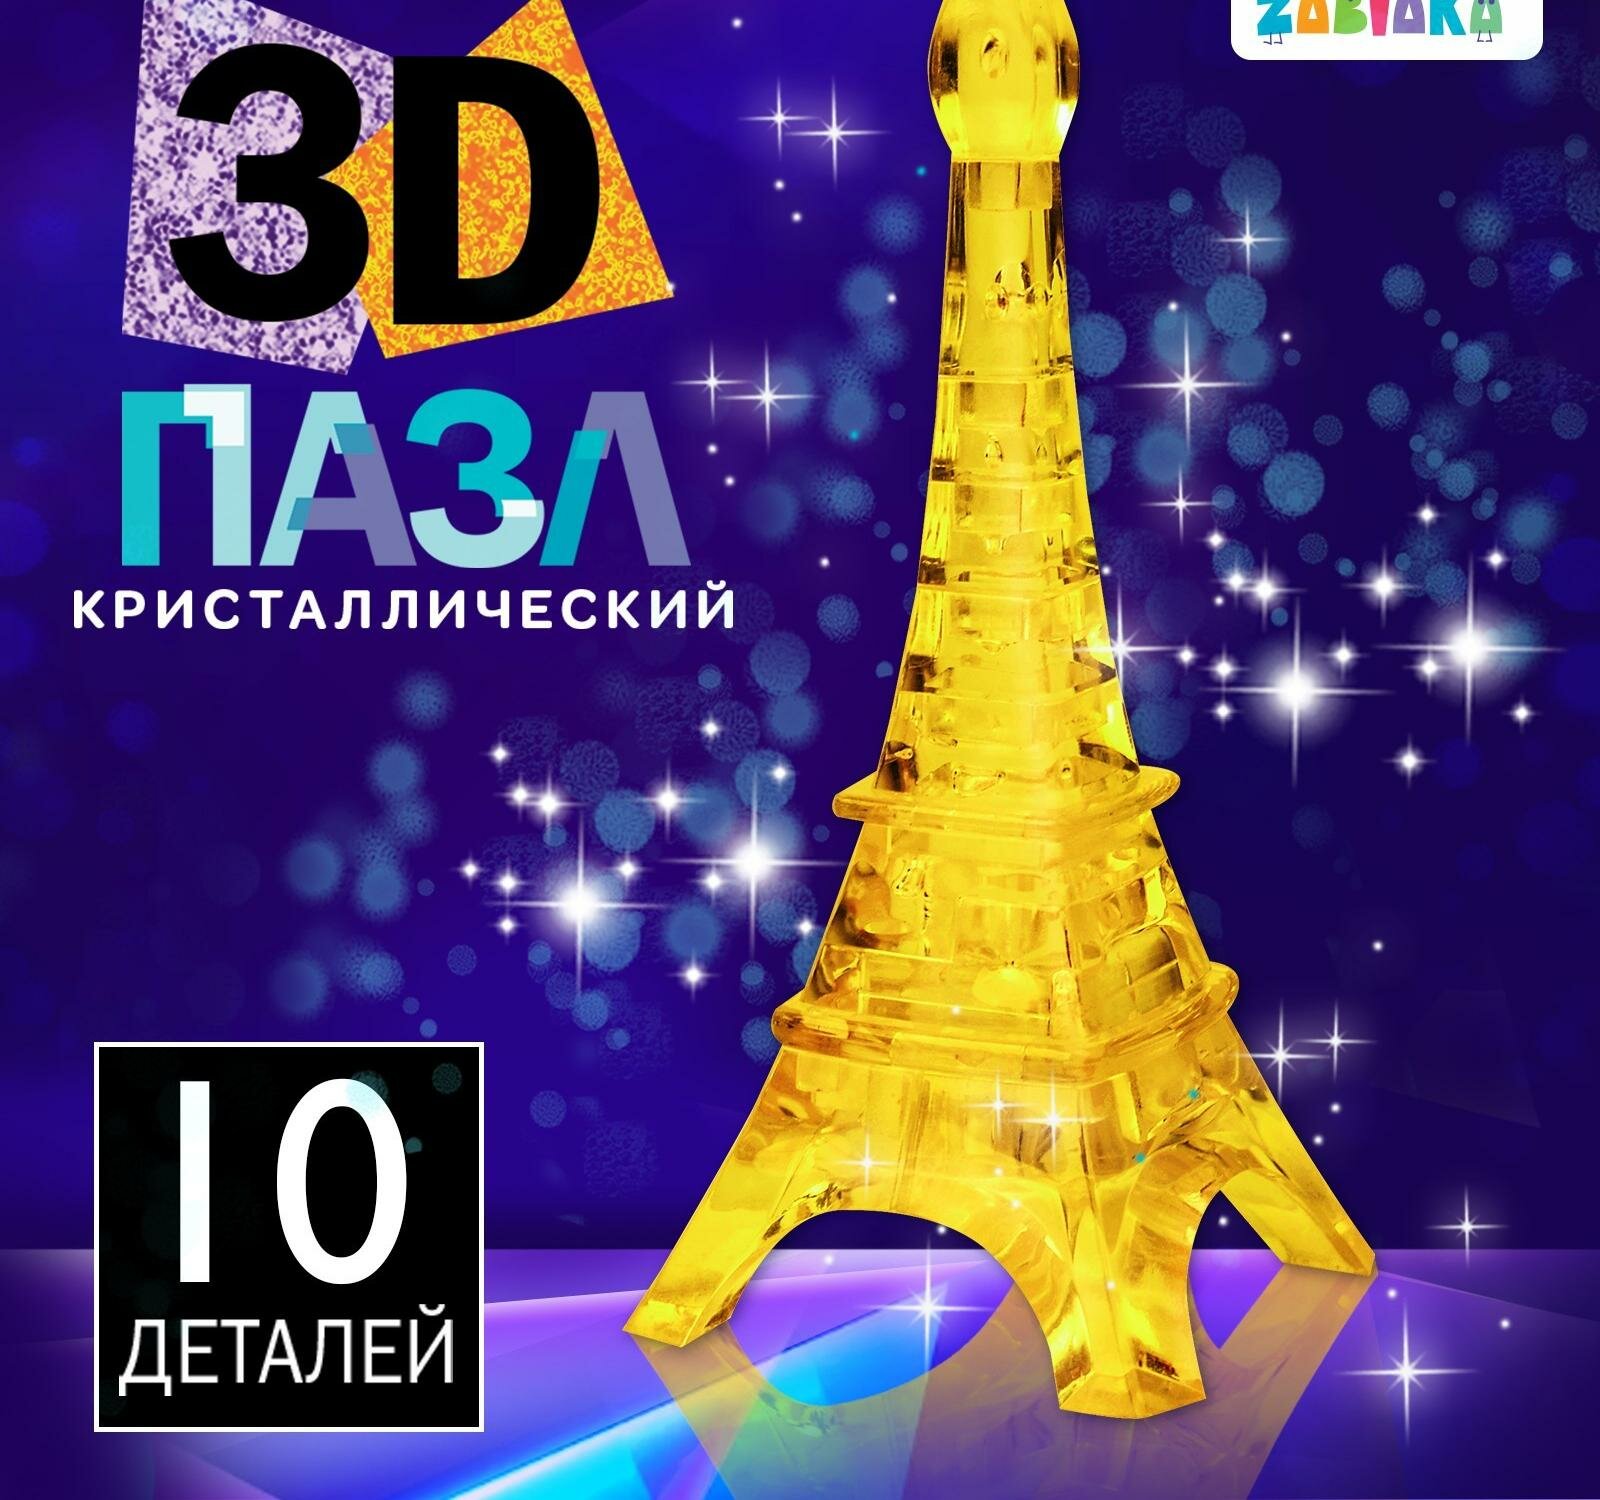 3D пазл "Эйфелева башня", кристаллический, 10 деталей, цвета